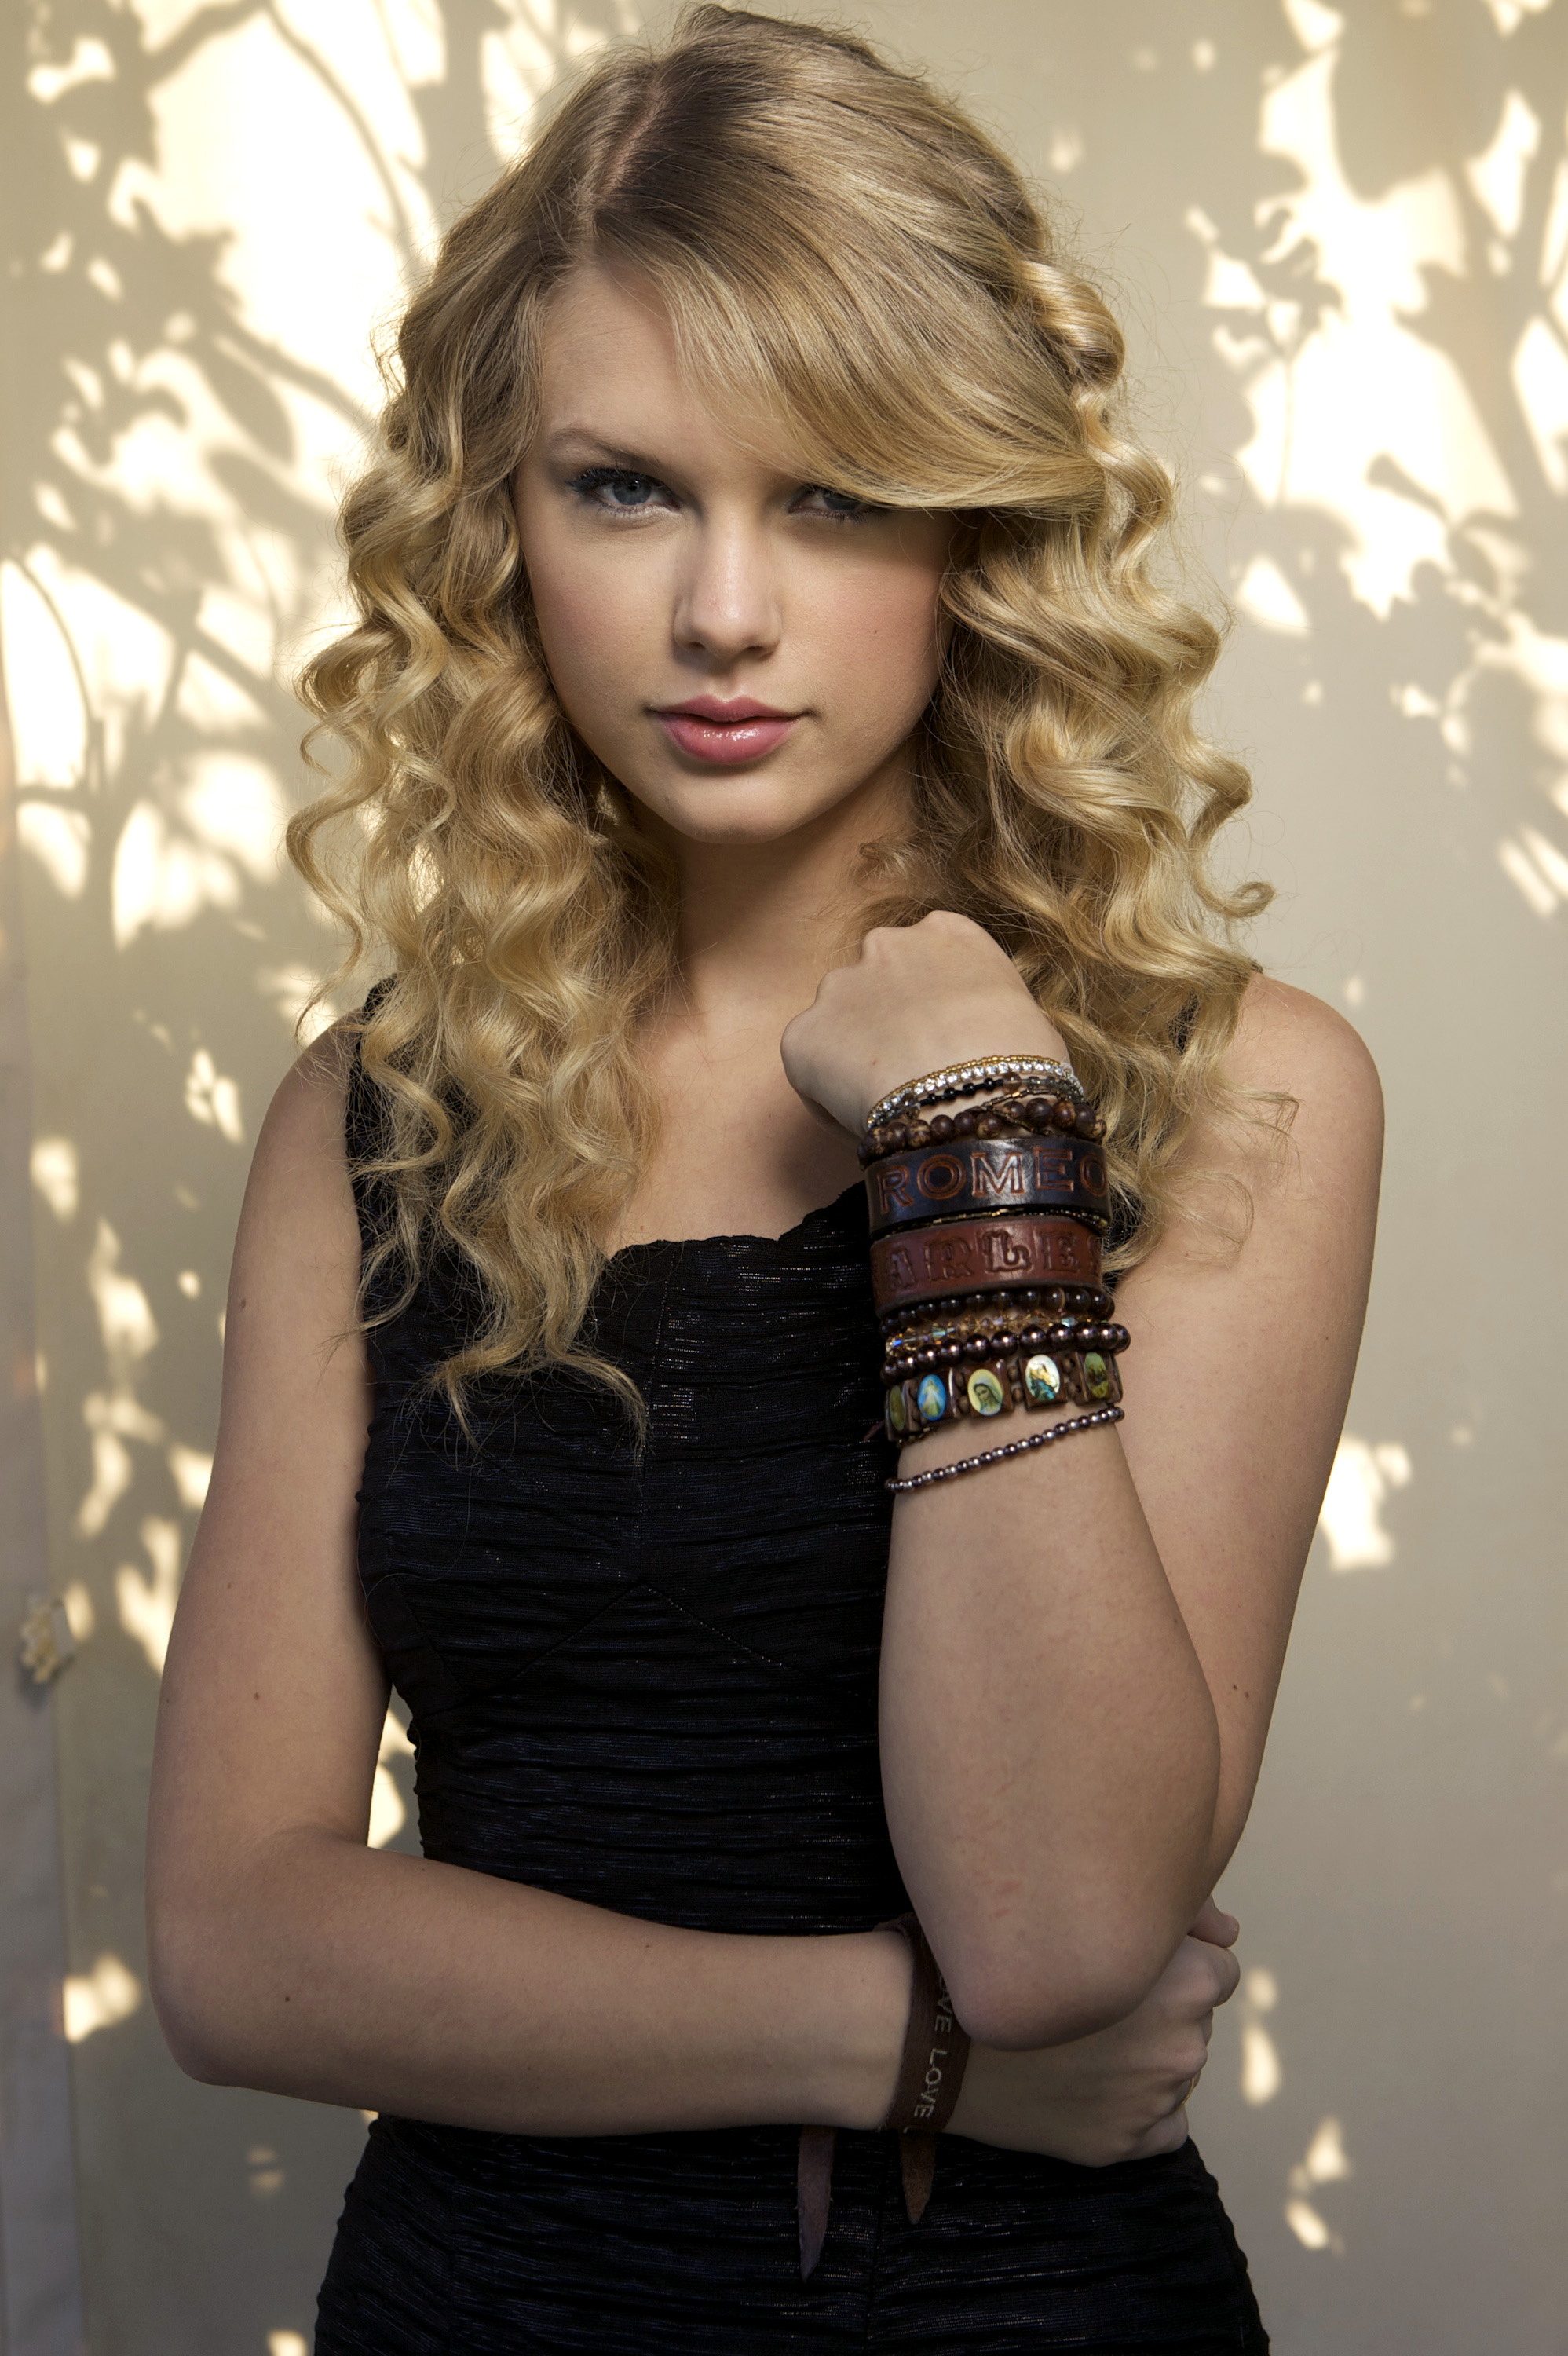 Taylor Swift image gorgonzoala HD wallpaper and background